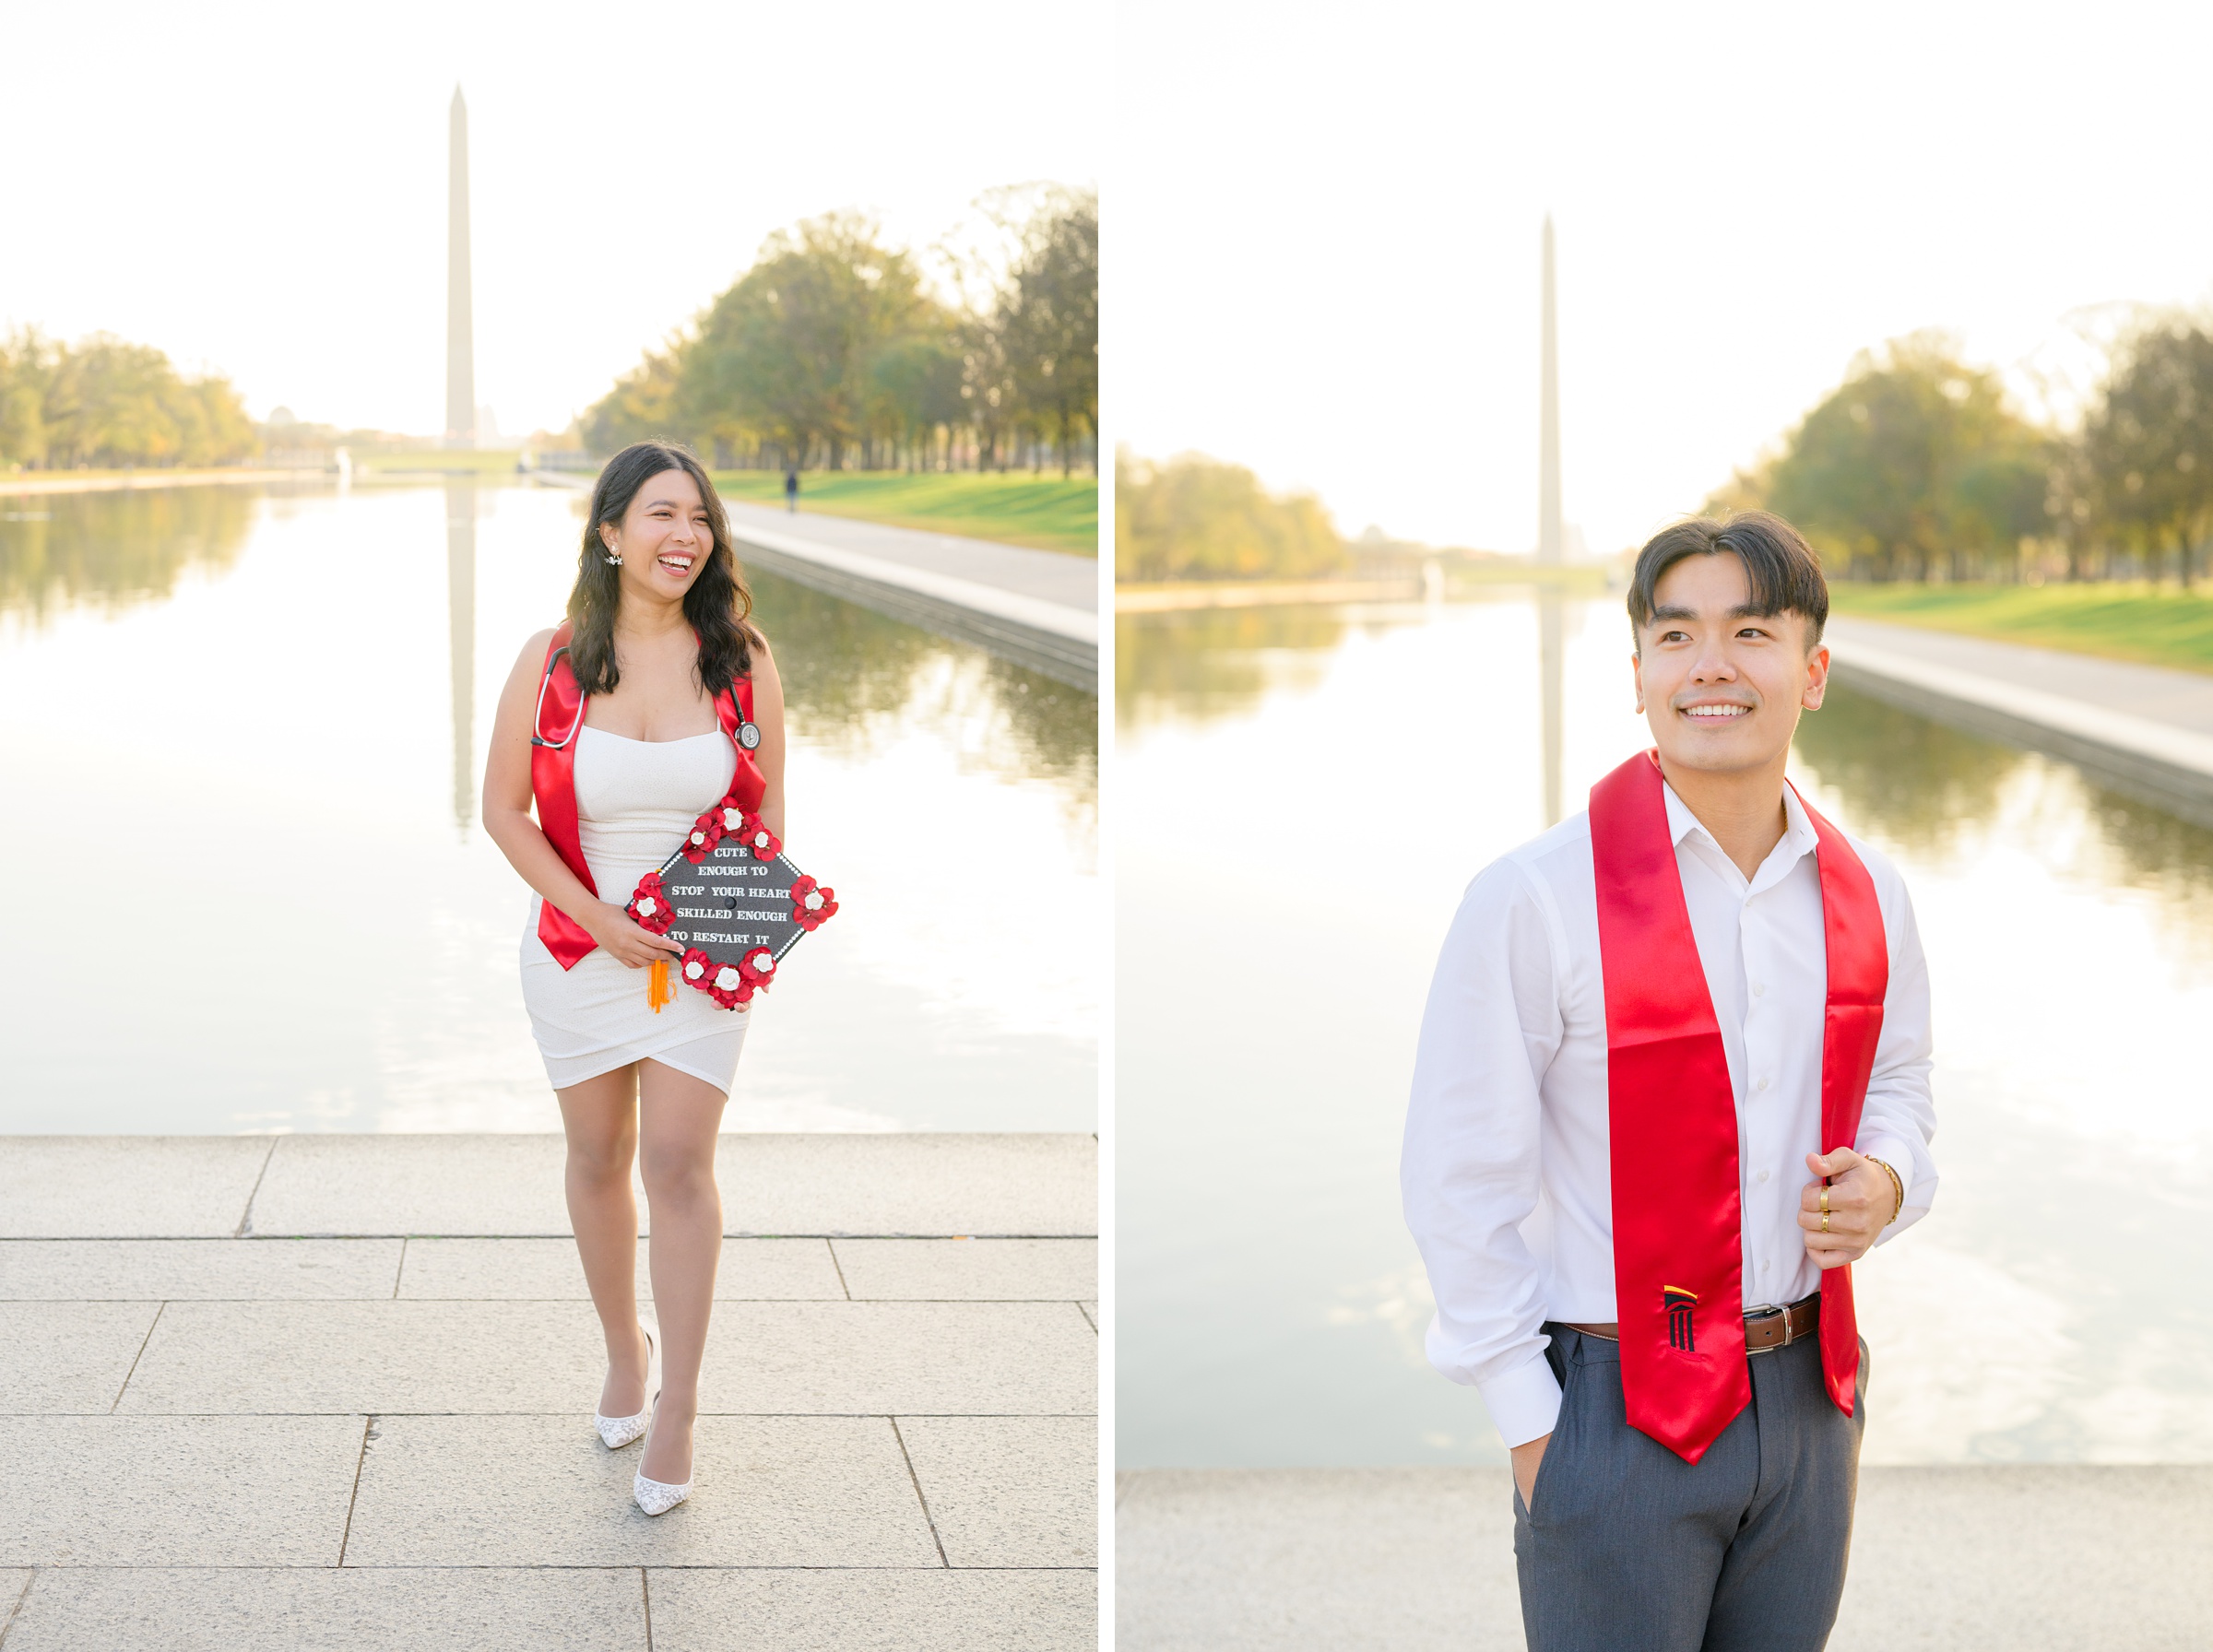 Jefferson Memorial Graduation Photos in Washington, D.C. photographed by Baltimore Grad Photographer Cait Kramer. 